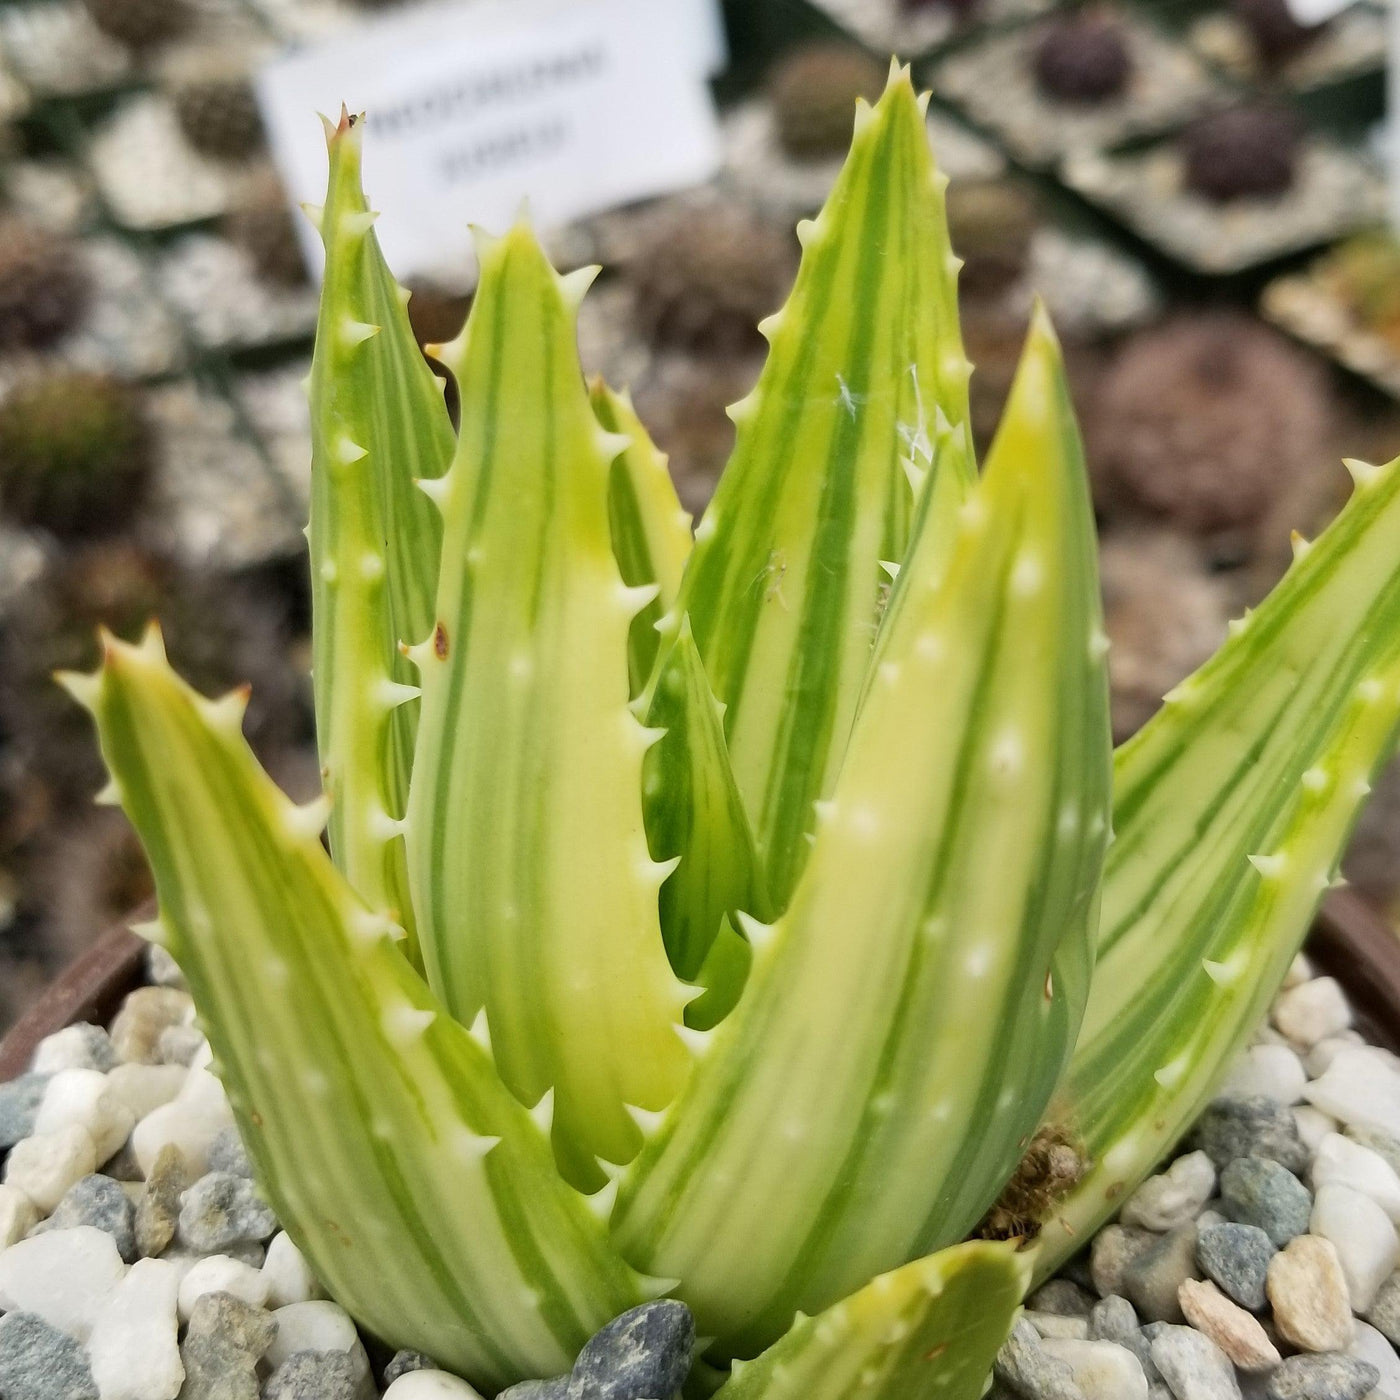 Golden Toothed Aloe - Aloe nobilis variegata